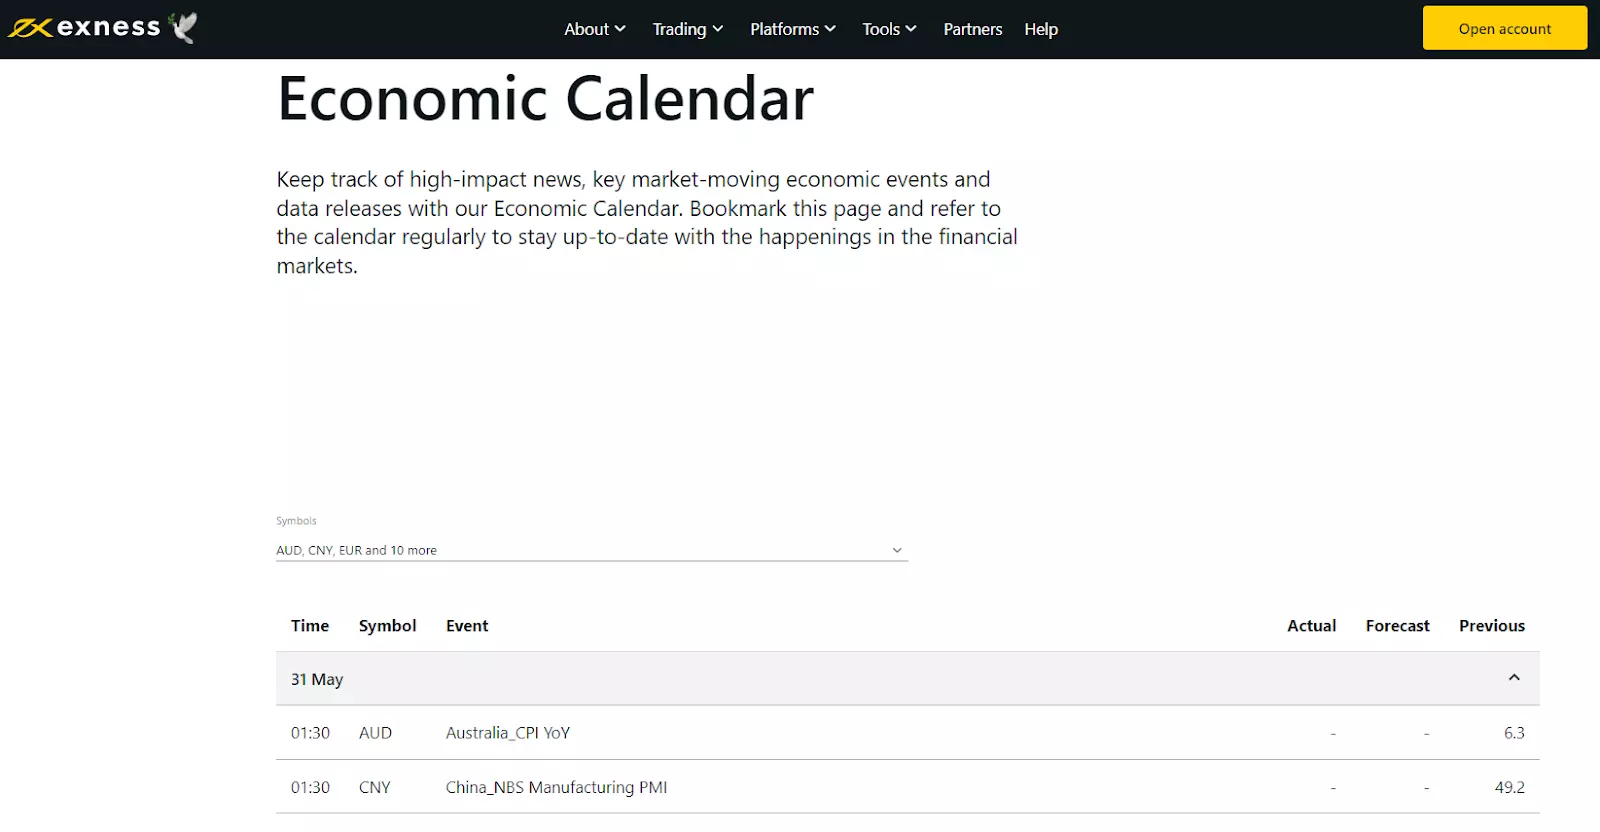 erramientas útiles de Exness: Calendario económico